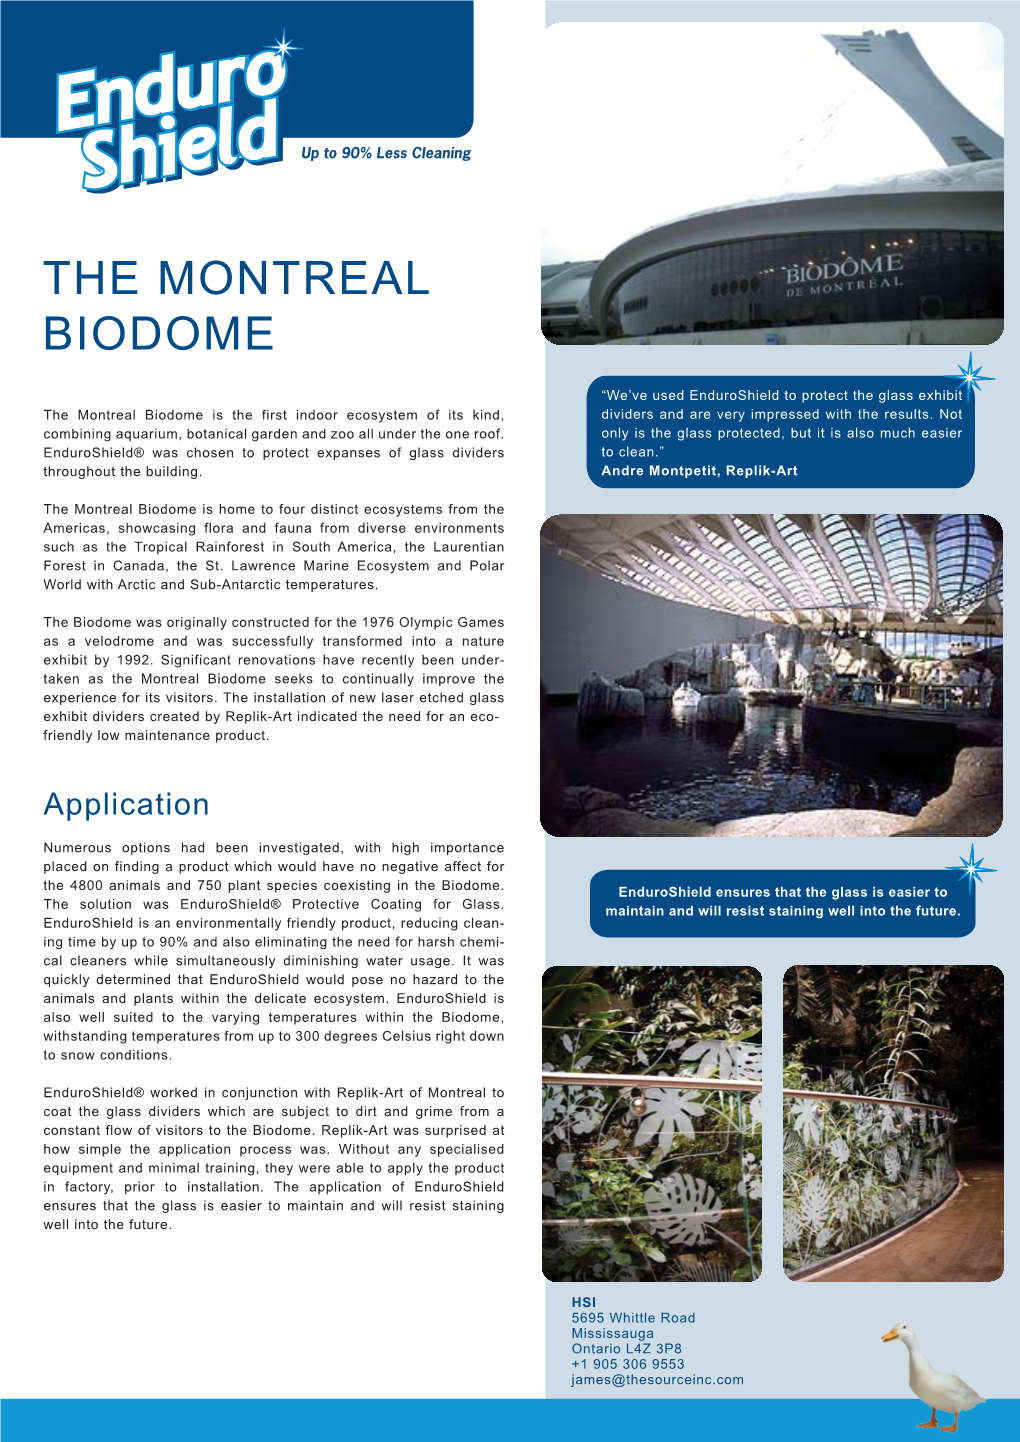 The Montreal Biodome